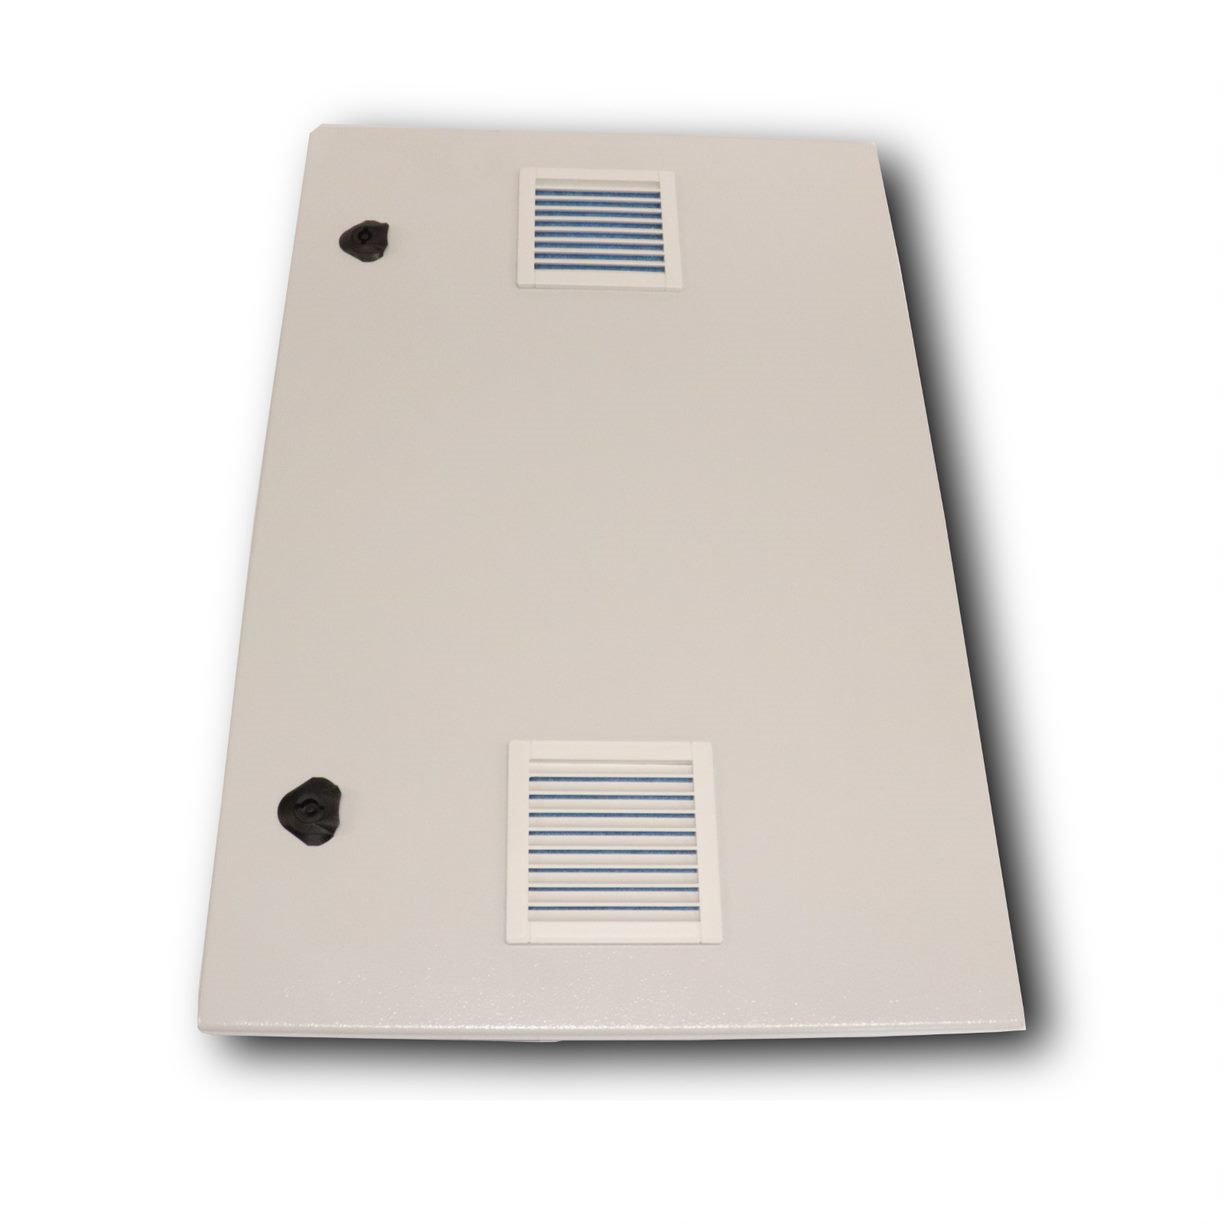 PSS* Compact Outdoor Enclosure IP54 Vented Door For MSB.604020 (2 x Vent)